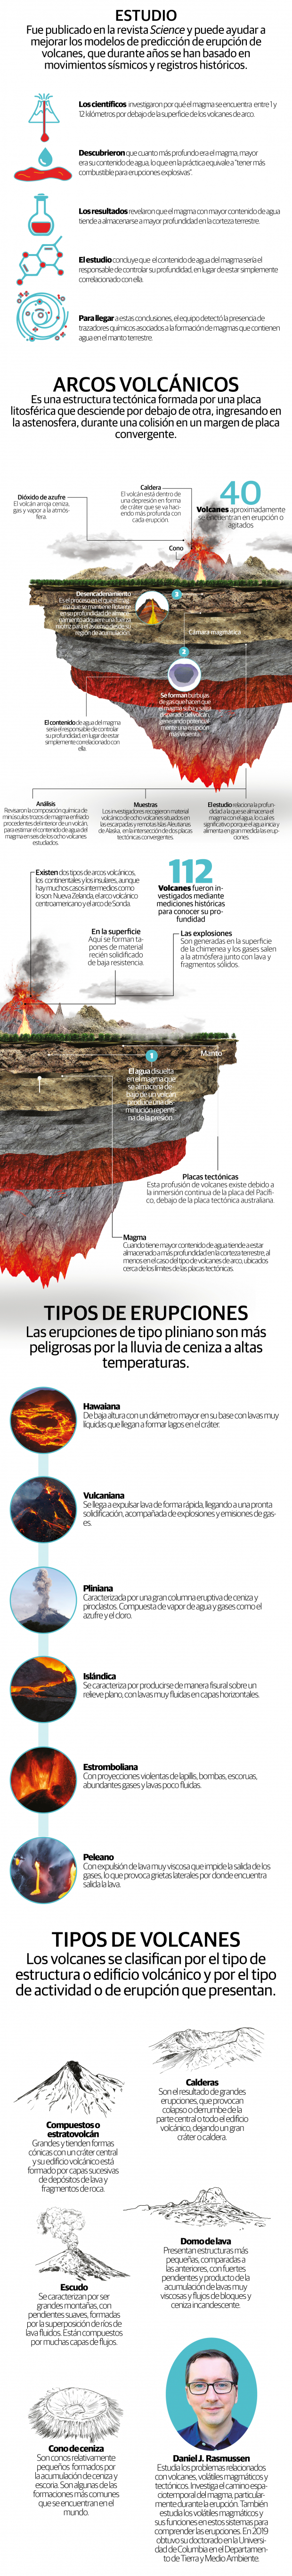 Magma, clave para predecir erupciones volcánicas